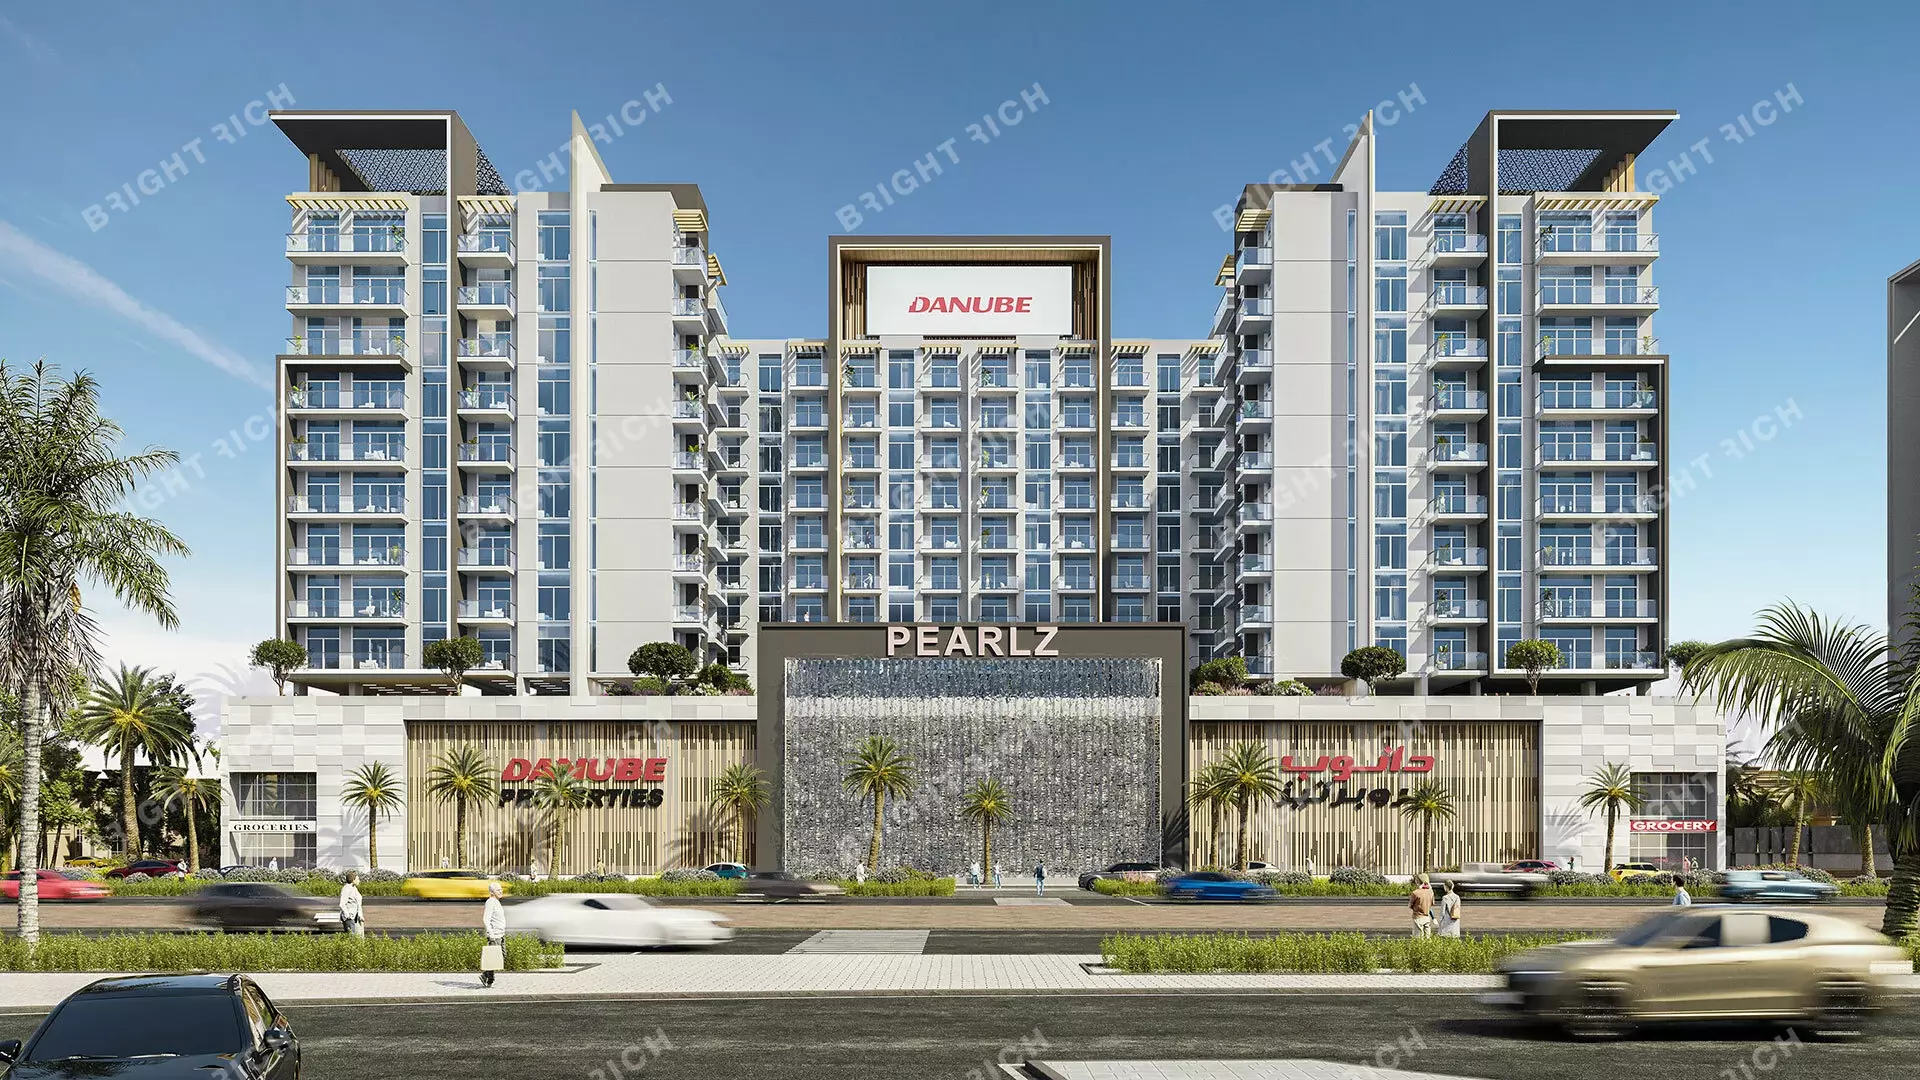 Pearlz Apartments, apart complex in Dubai